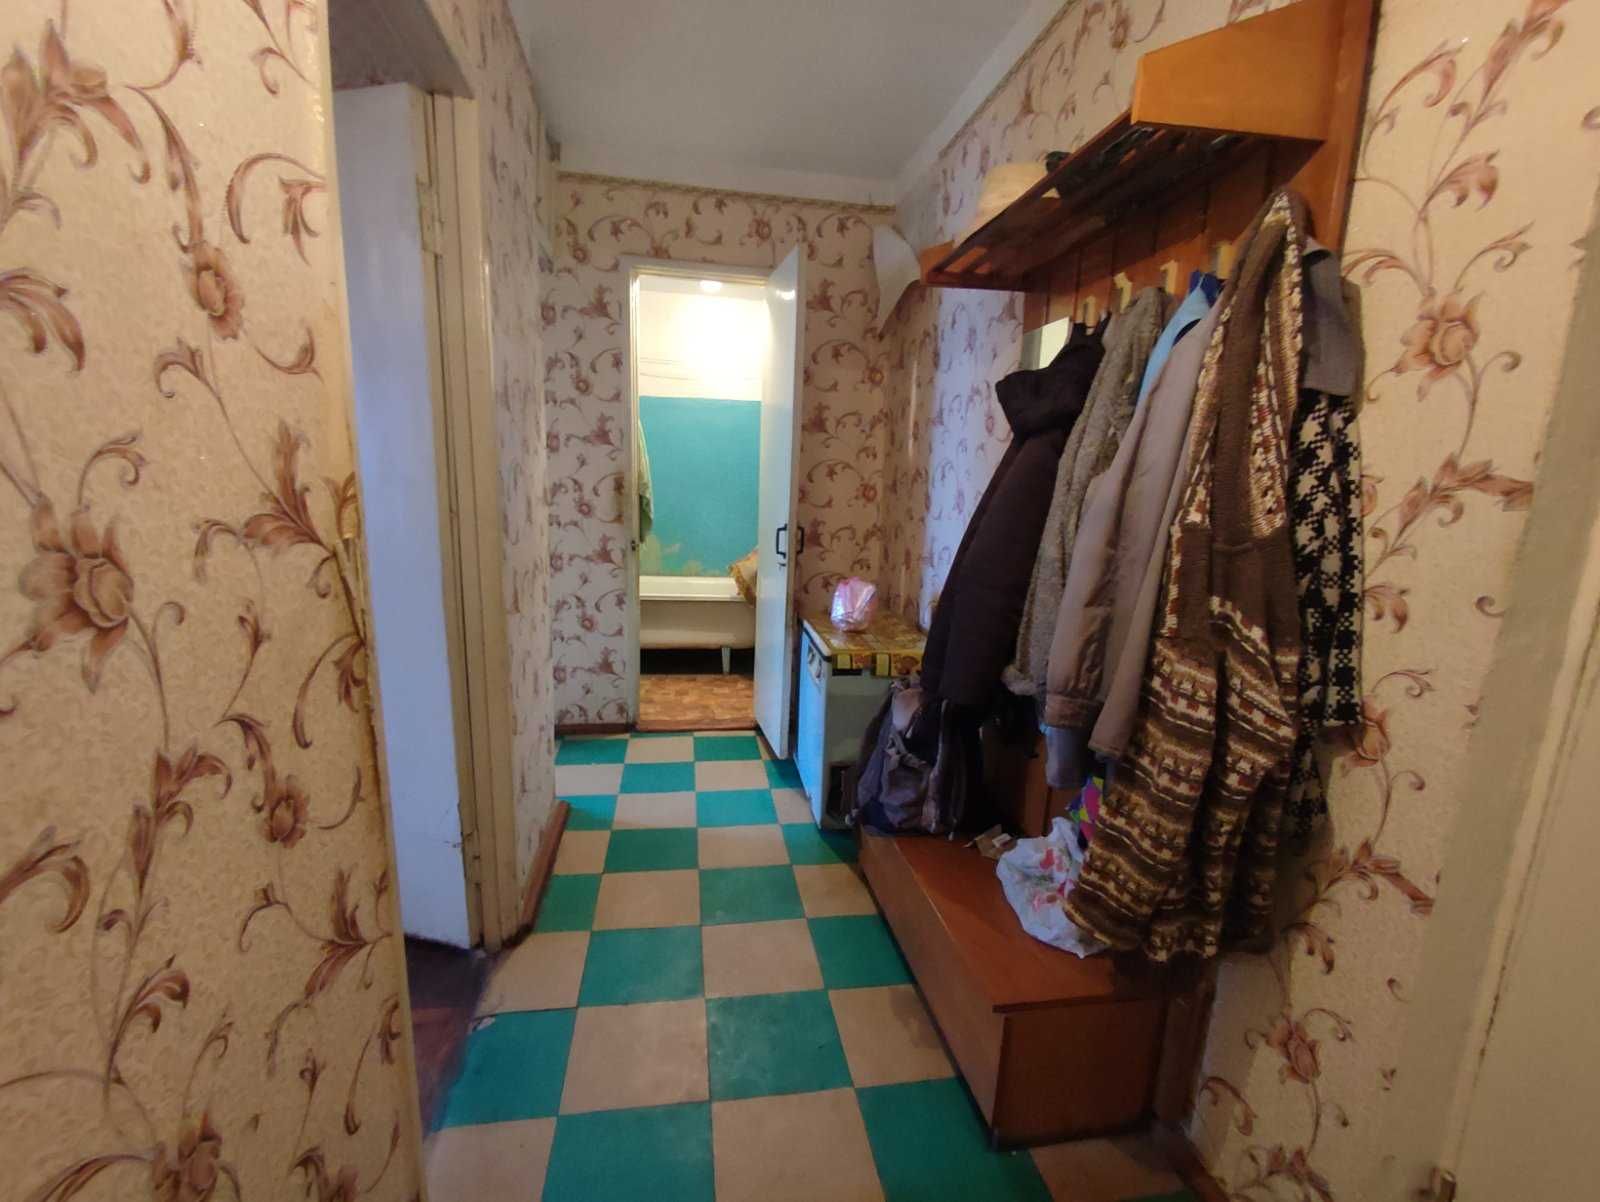 Продается 2-х комнатная квартира по ул. Воронина 51 кв.м